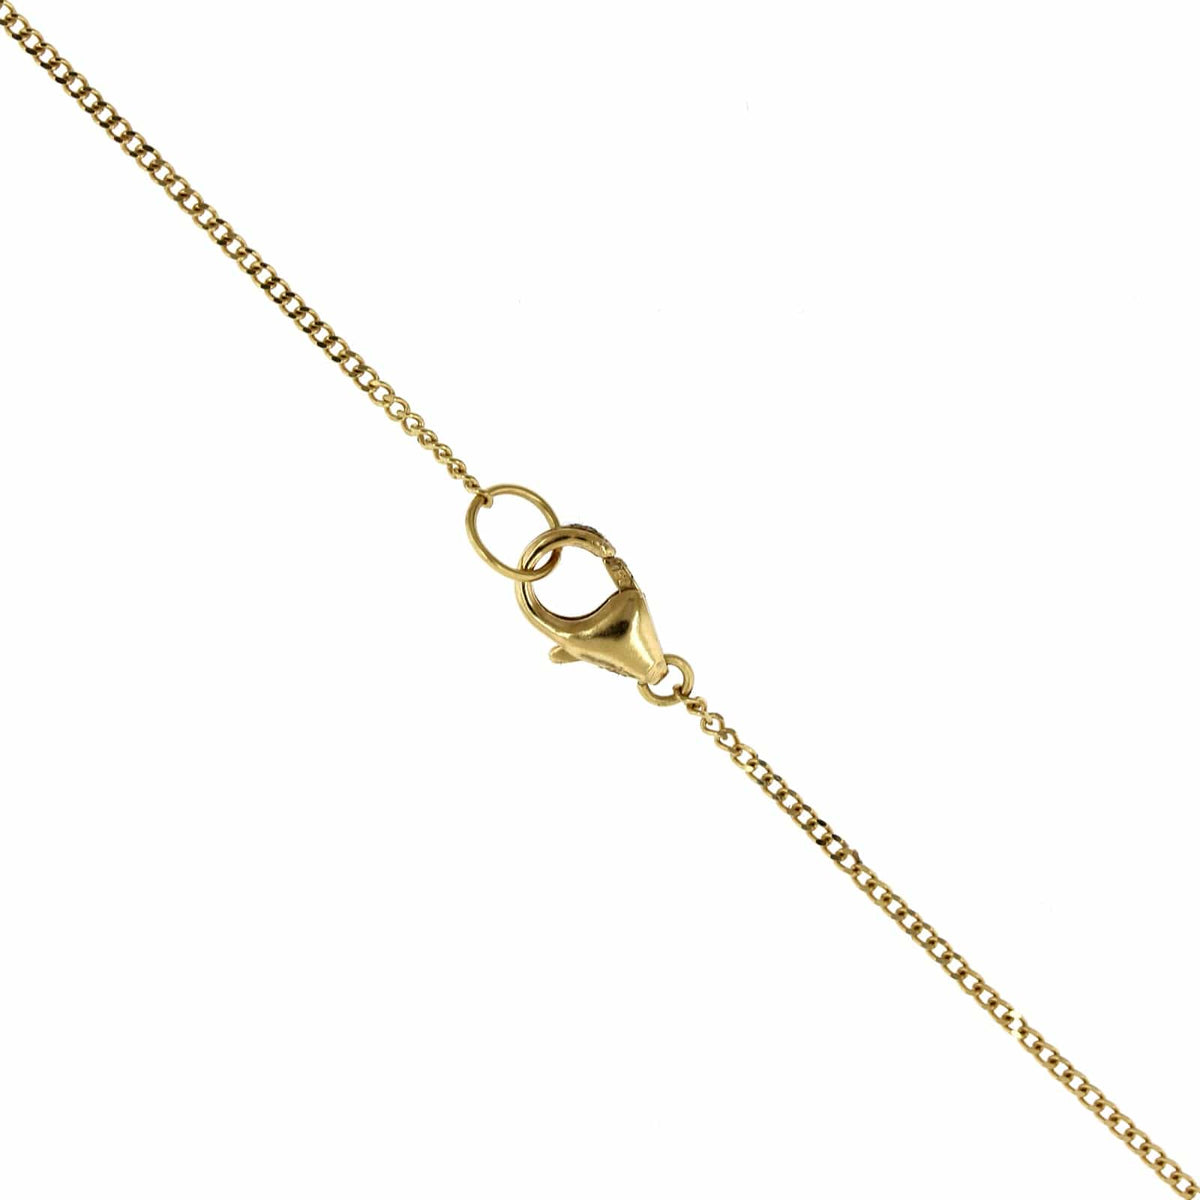 Amali 18K Yellow Gold Teardrop Moonstone Necklace